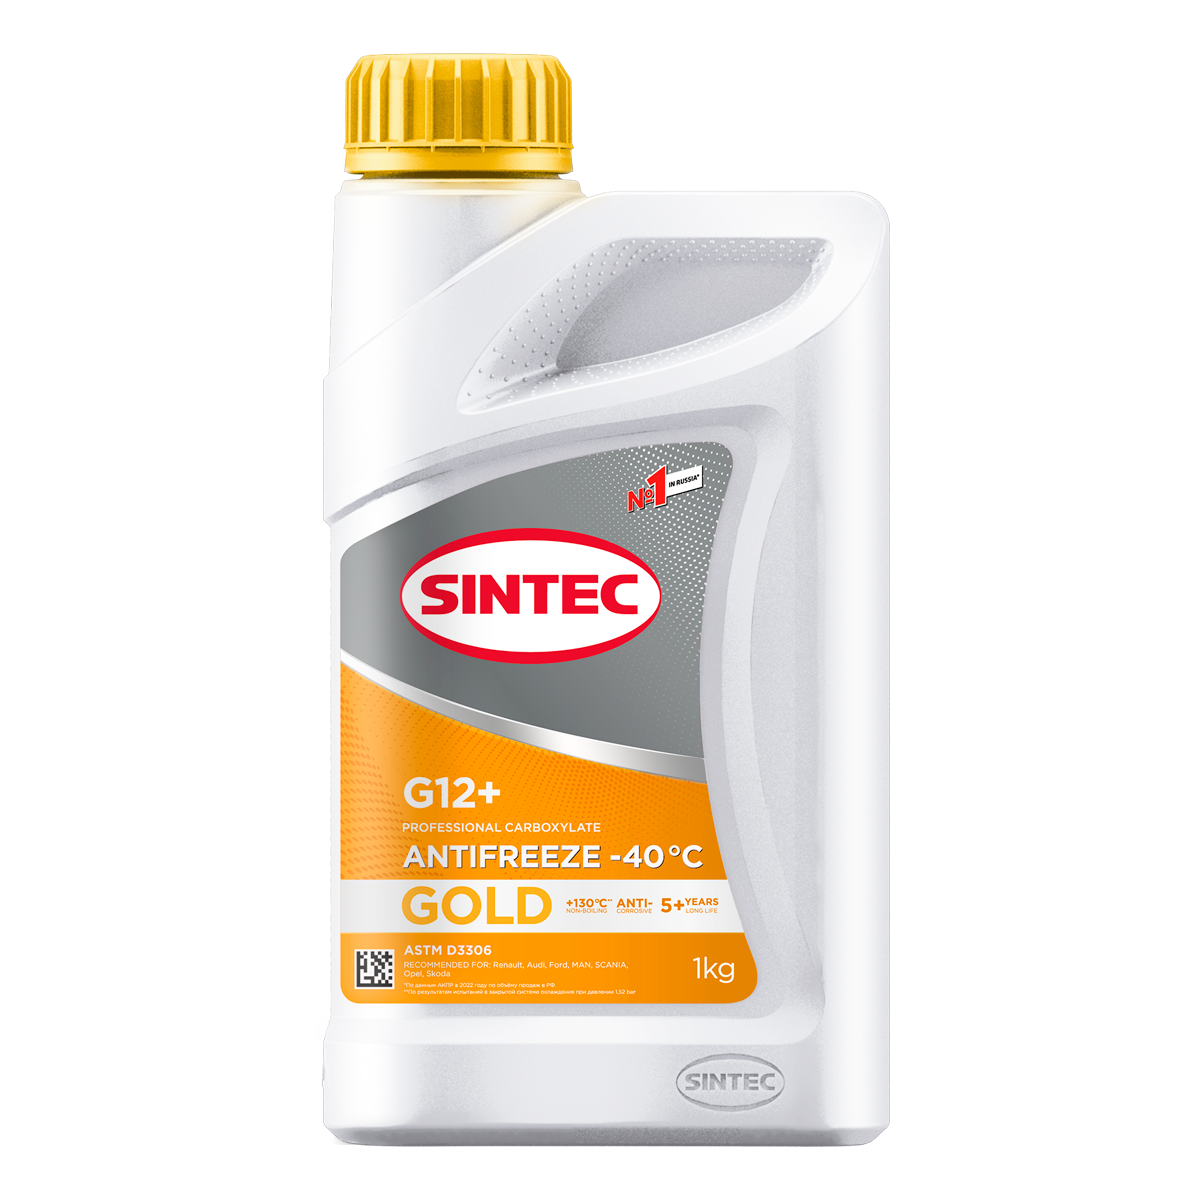 Антифриз SINTEC Antifreeze G12 - 40°C GOLD 1кг.